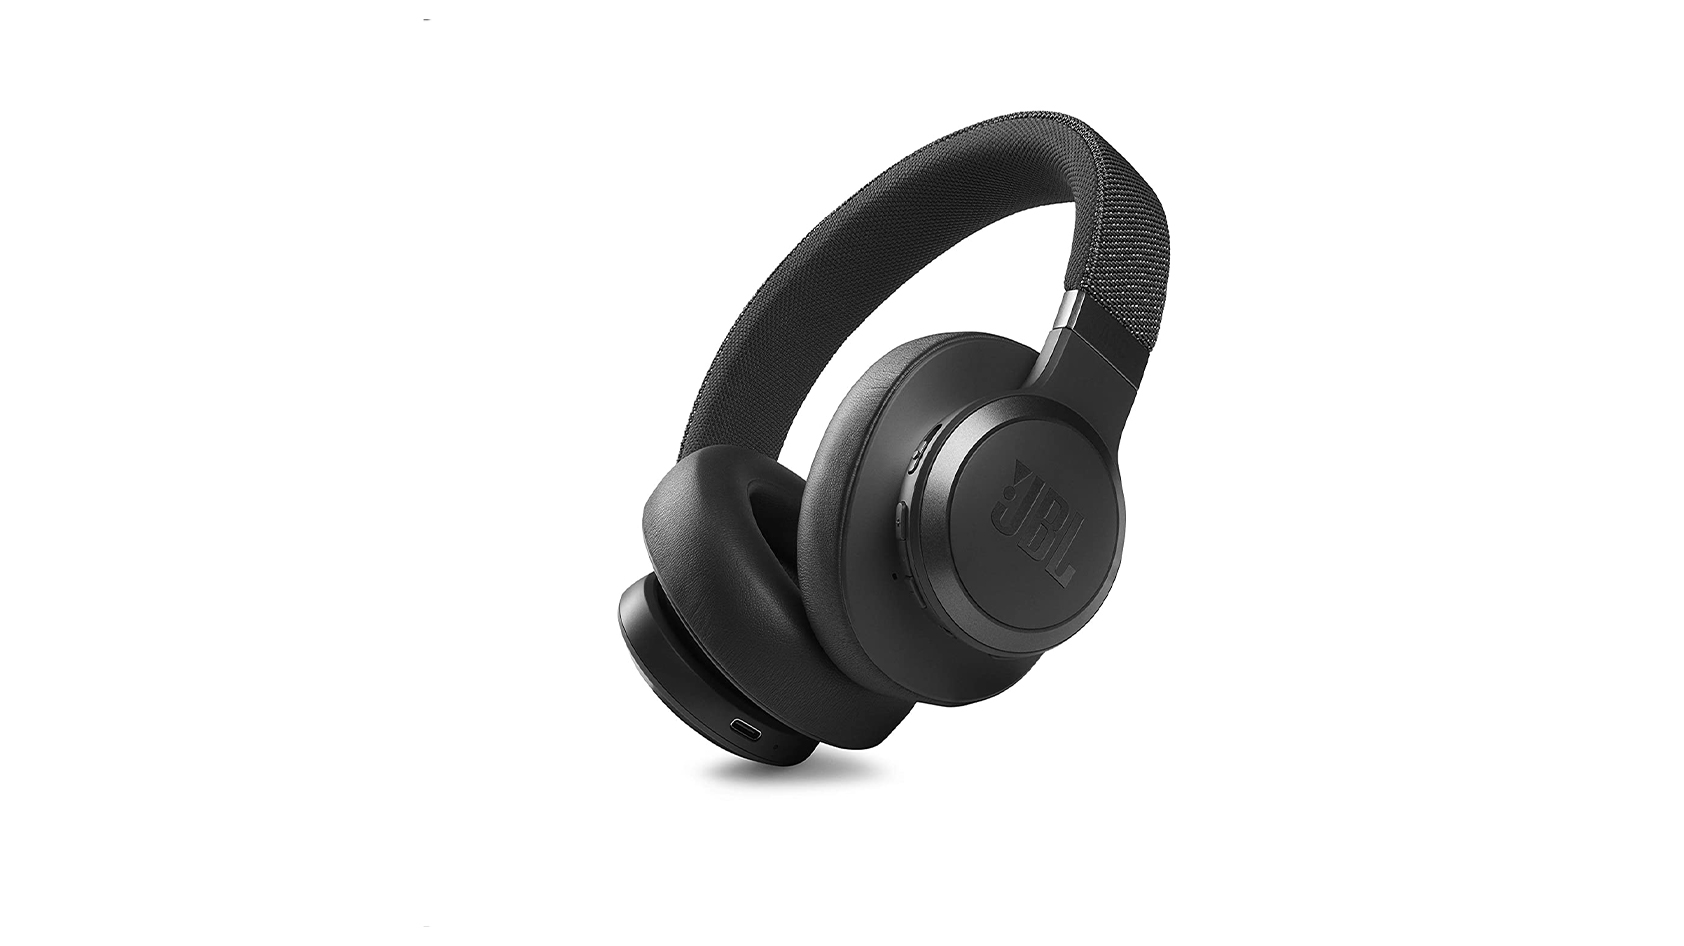 JBL VIBE100TWS- Lifestyle Headphones - Bluetooth/True Wireless Earbuds 